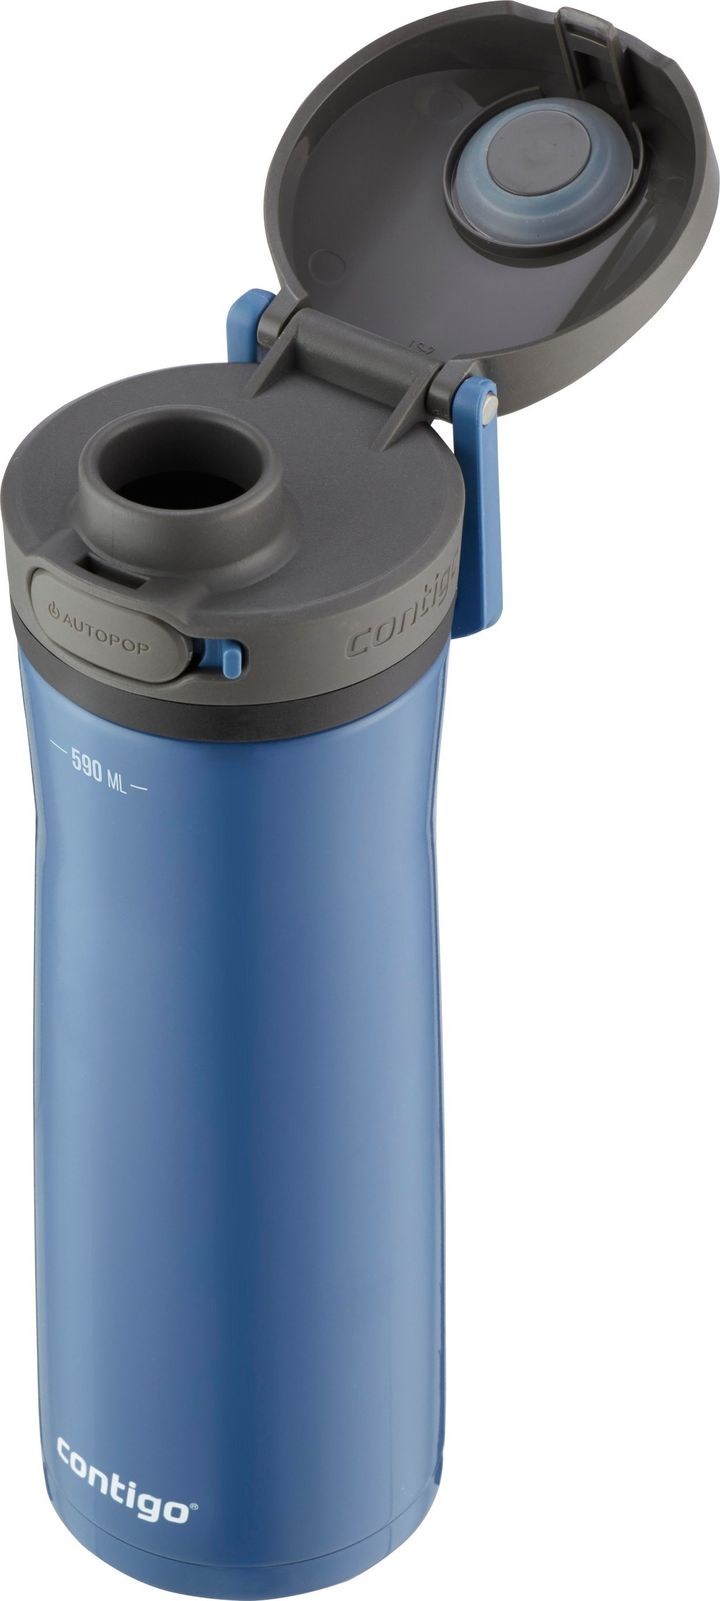 Contigo Jackson Chill Autopop Vacuum-Insulated Water Bottle 590 ml Blue Corn Contigo